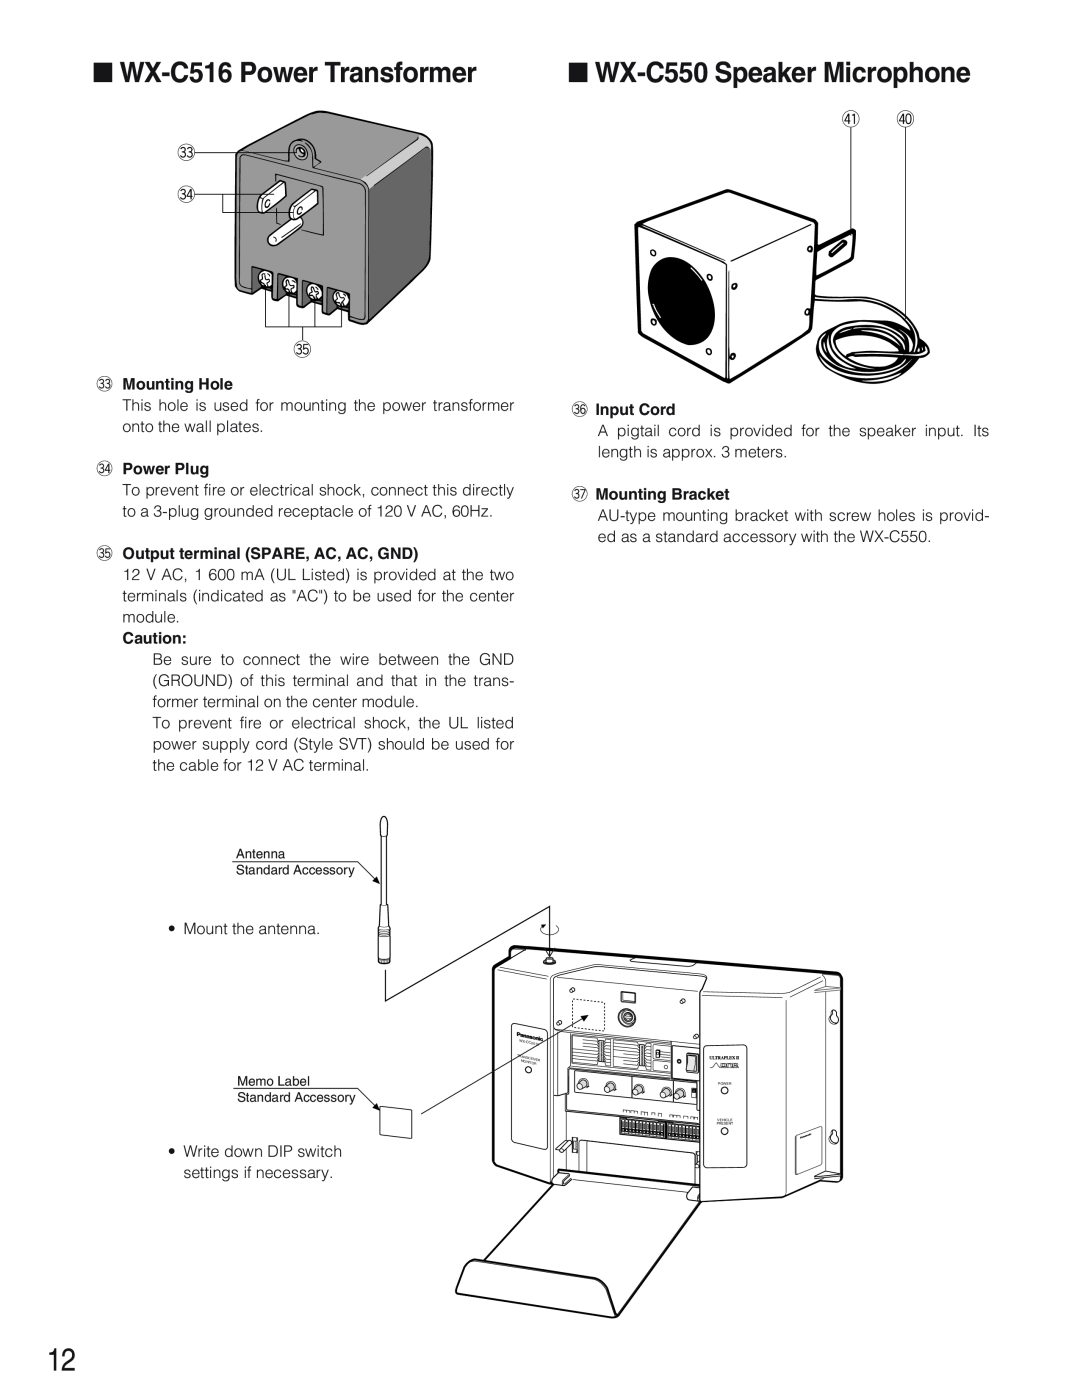 Panasonic WX-CC2010 operating instructions WX-C516Power Transformer, WX-C550Speaker Microphone, #3 #4 #5, $1 $0 